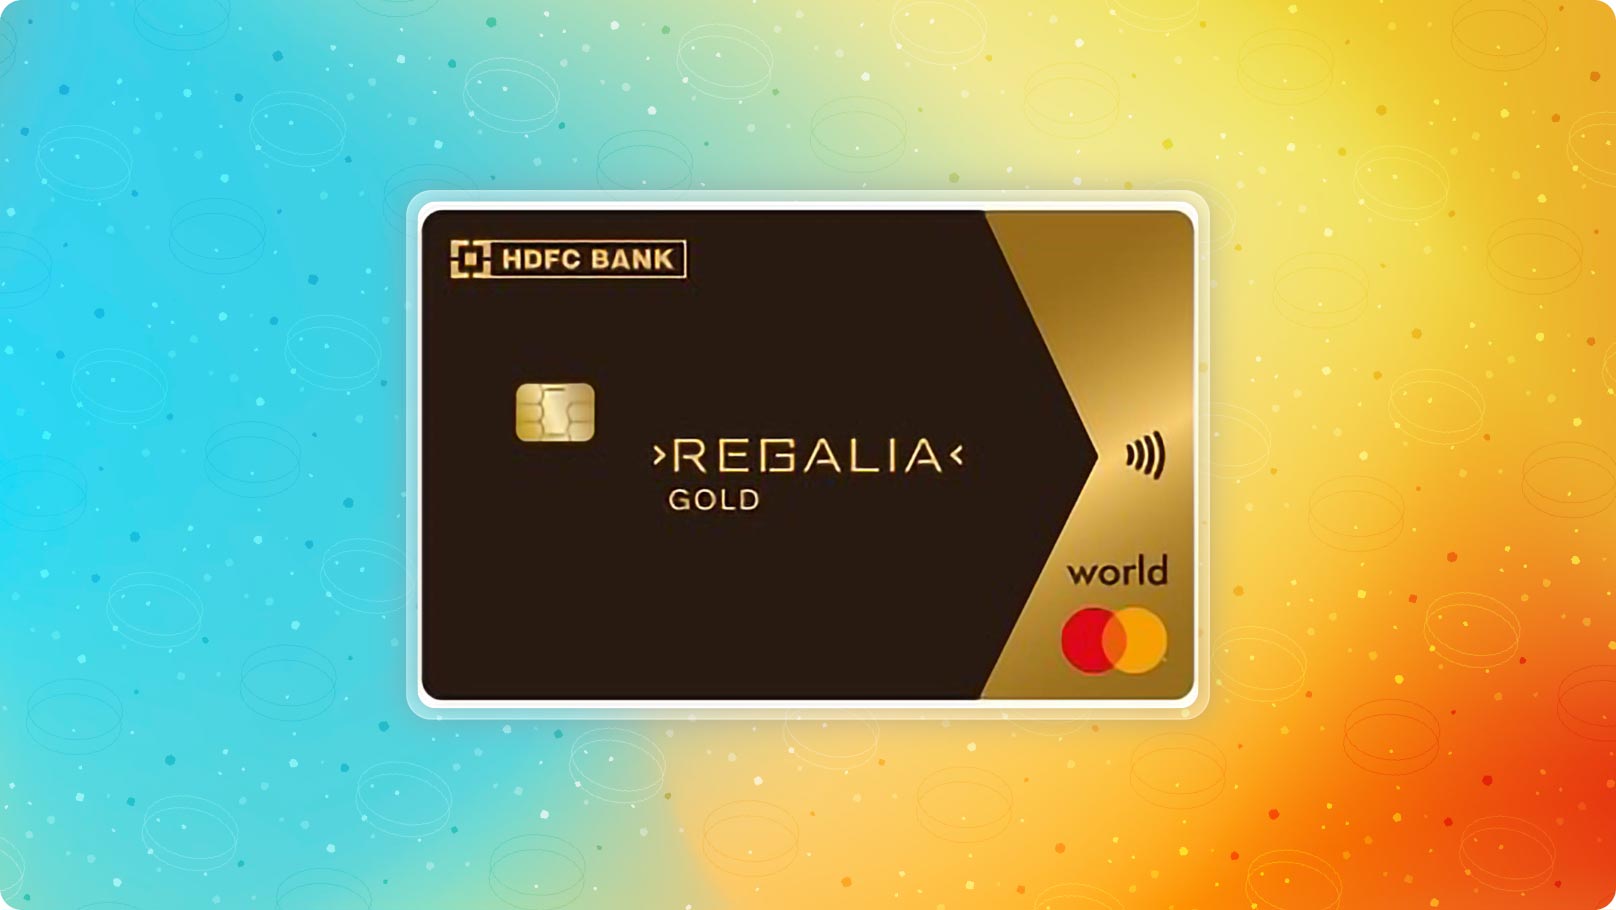 HDFC Bank Regalia Gold Credit Card Review